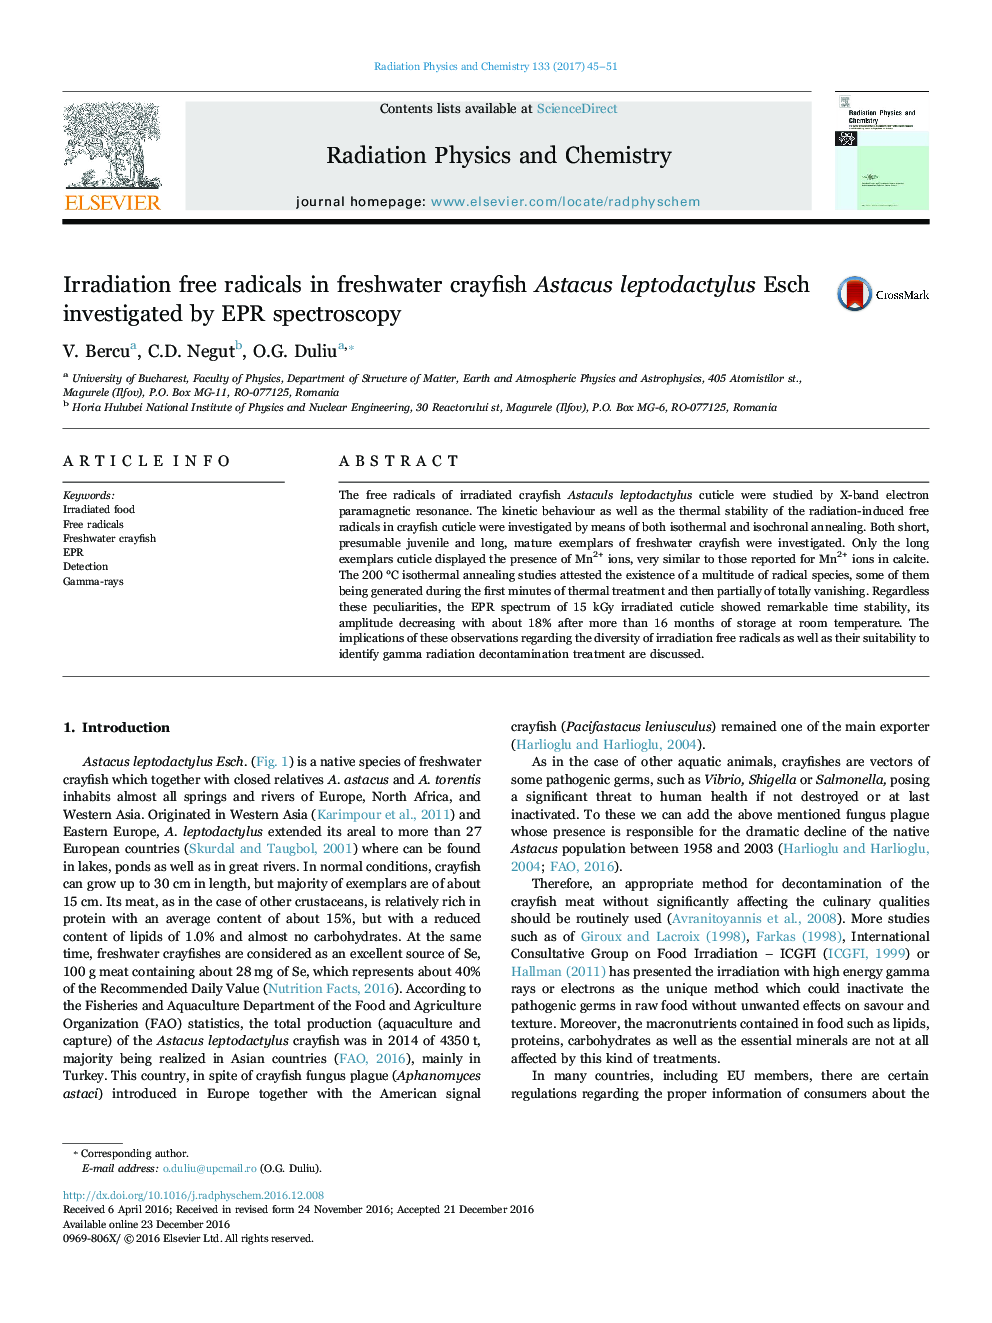 Irradiation free radicals in freshwater crayfish Astacus leptodactylus Esch investigated by EPR spectroscopy